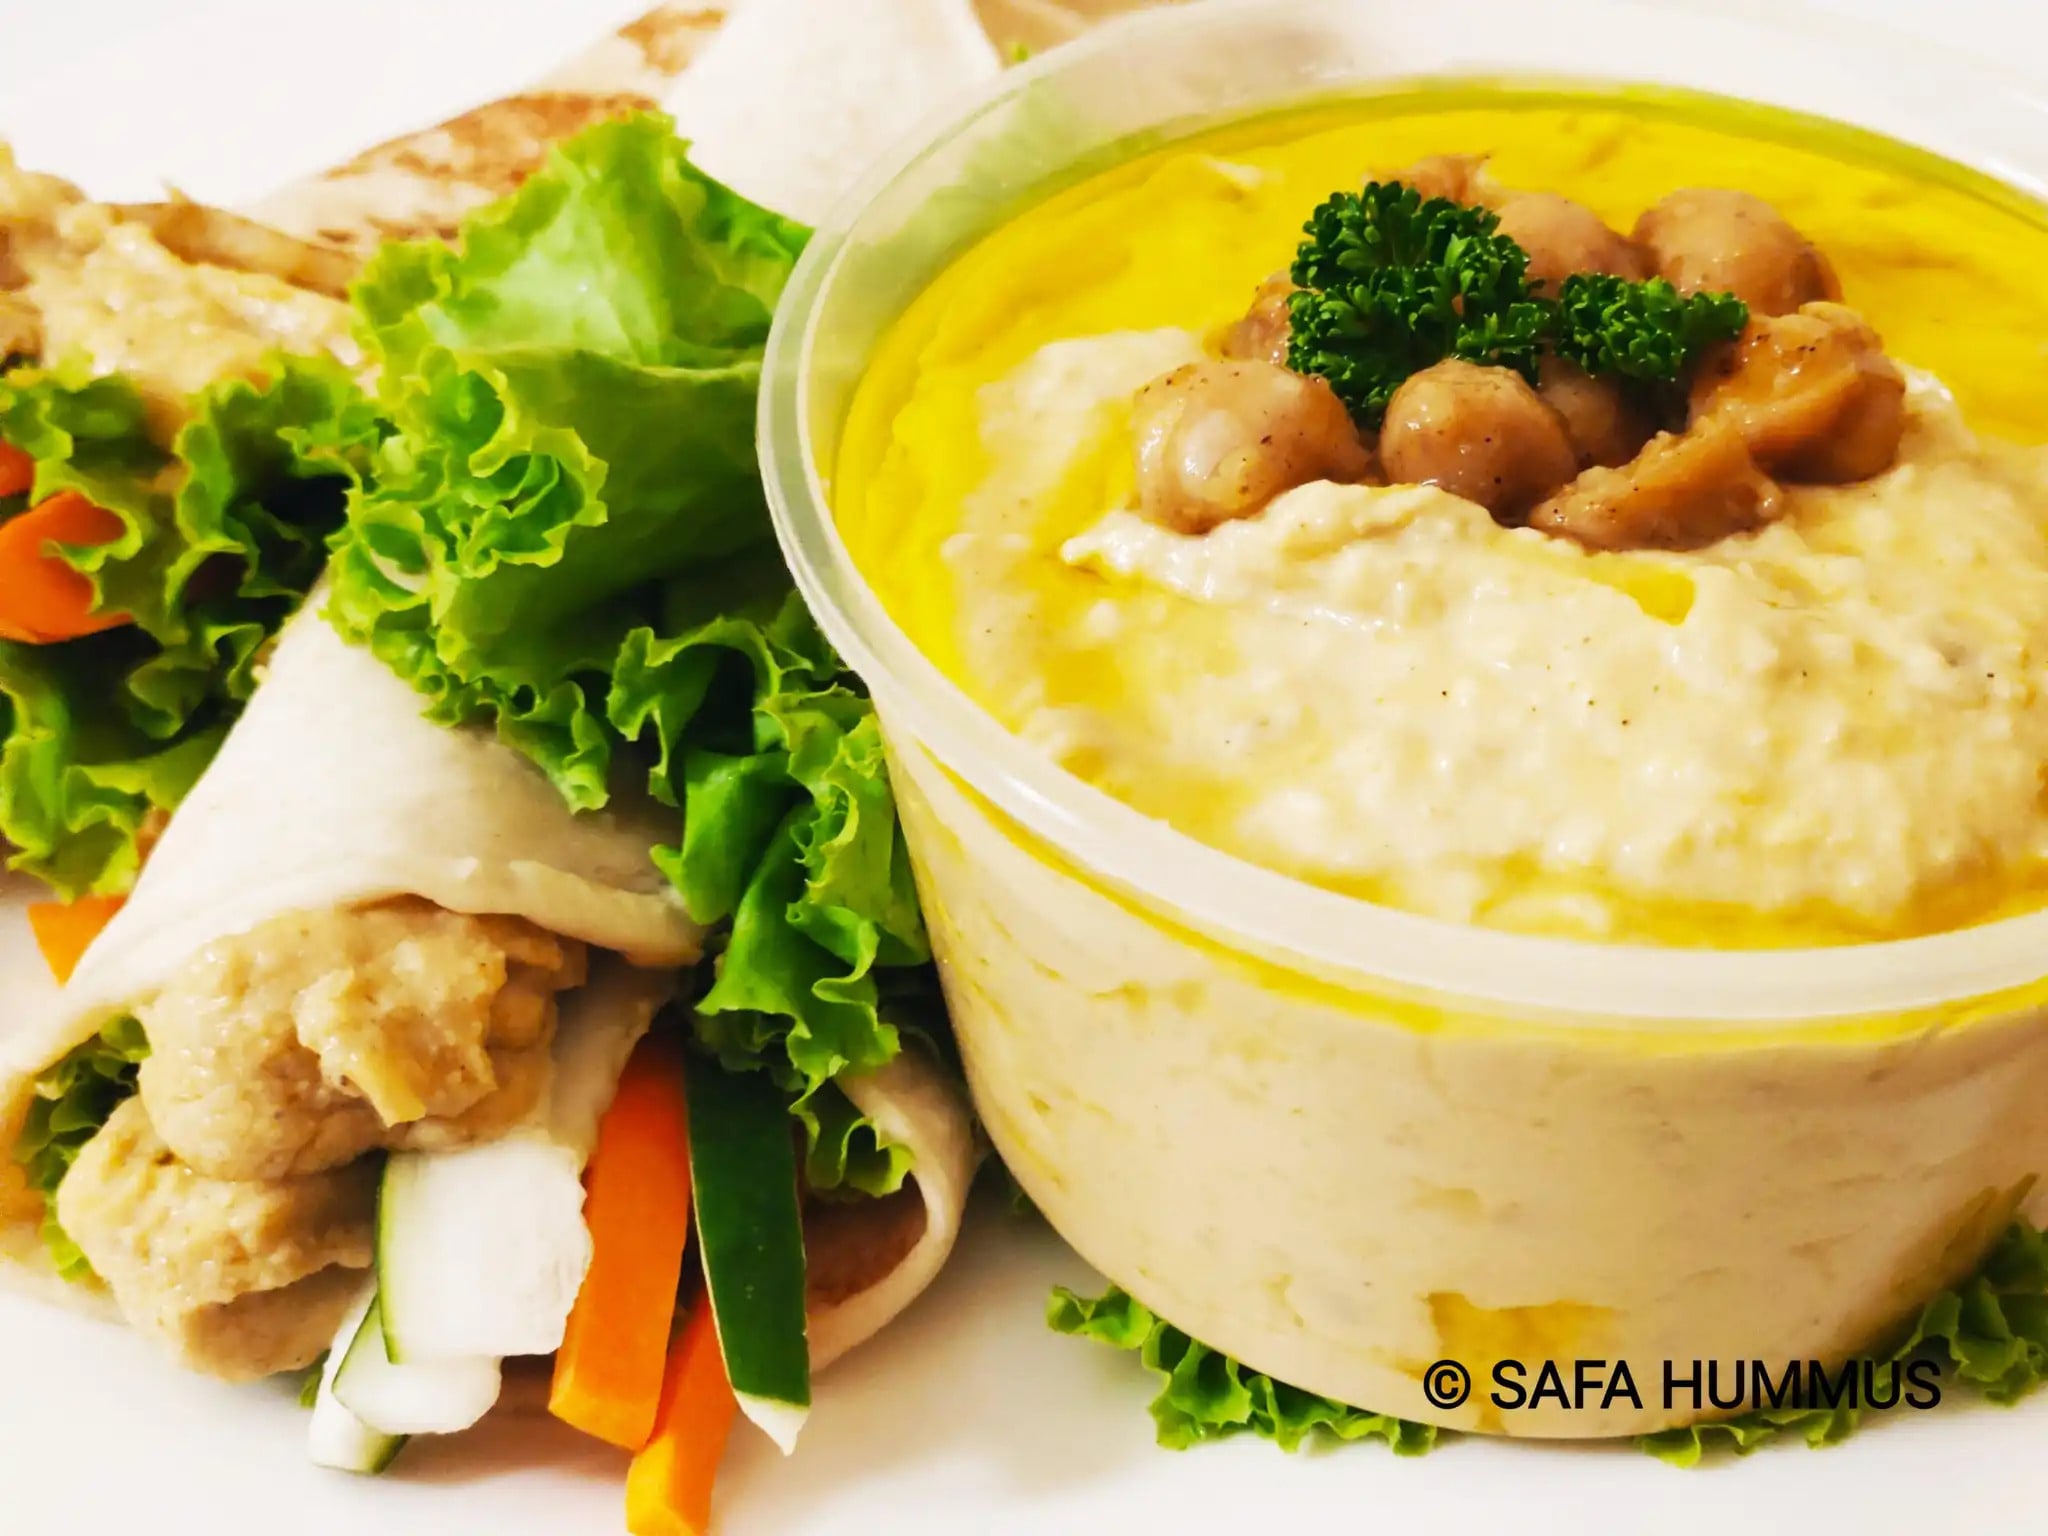 SAFA Hummus Serving Sample